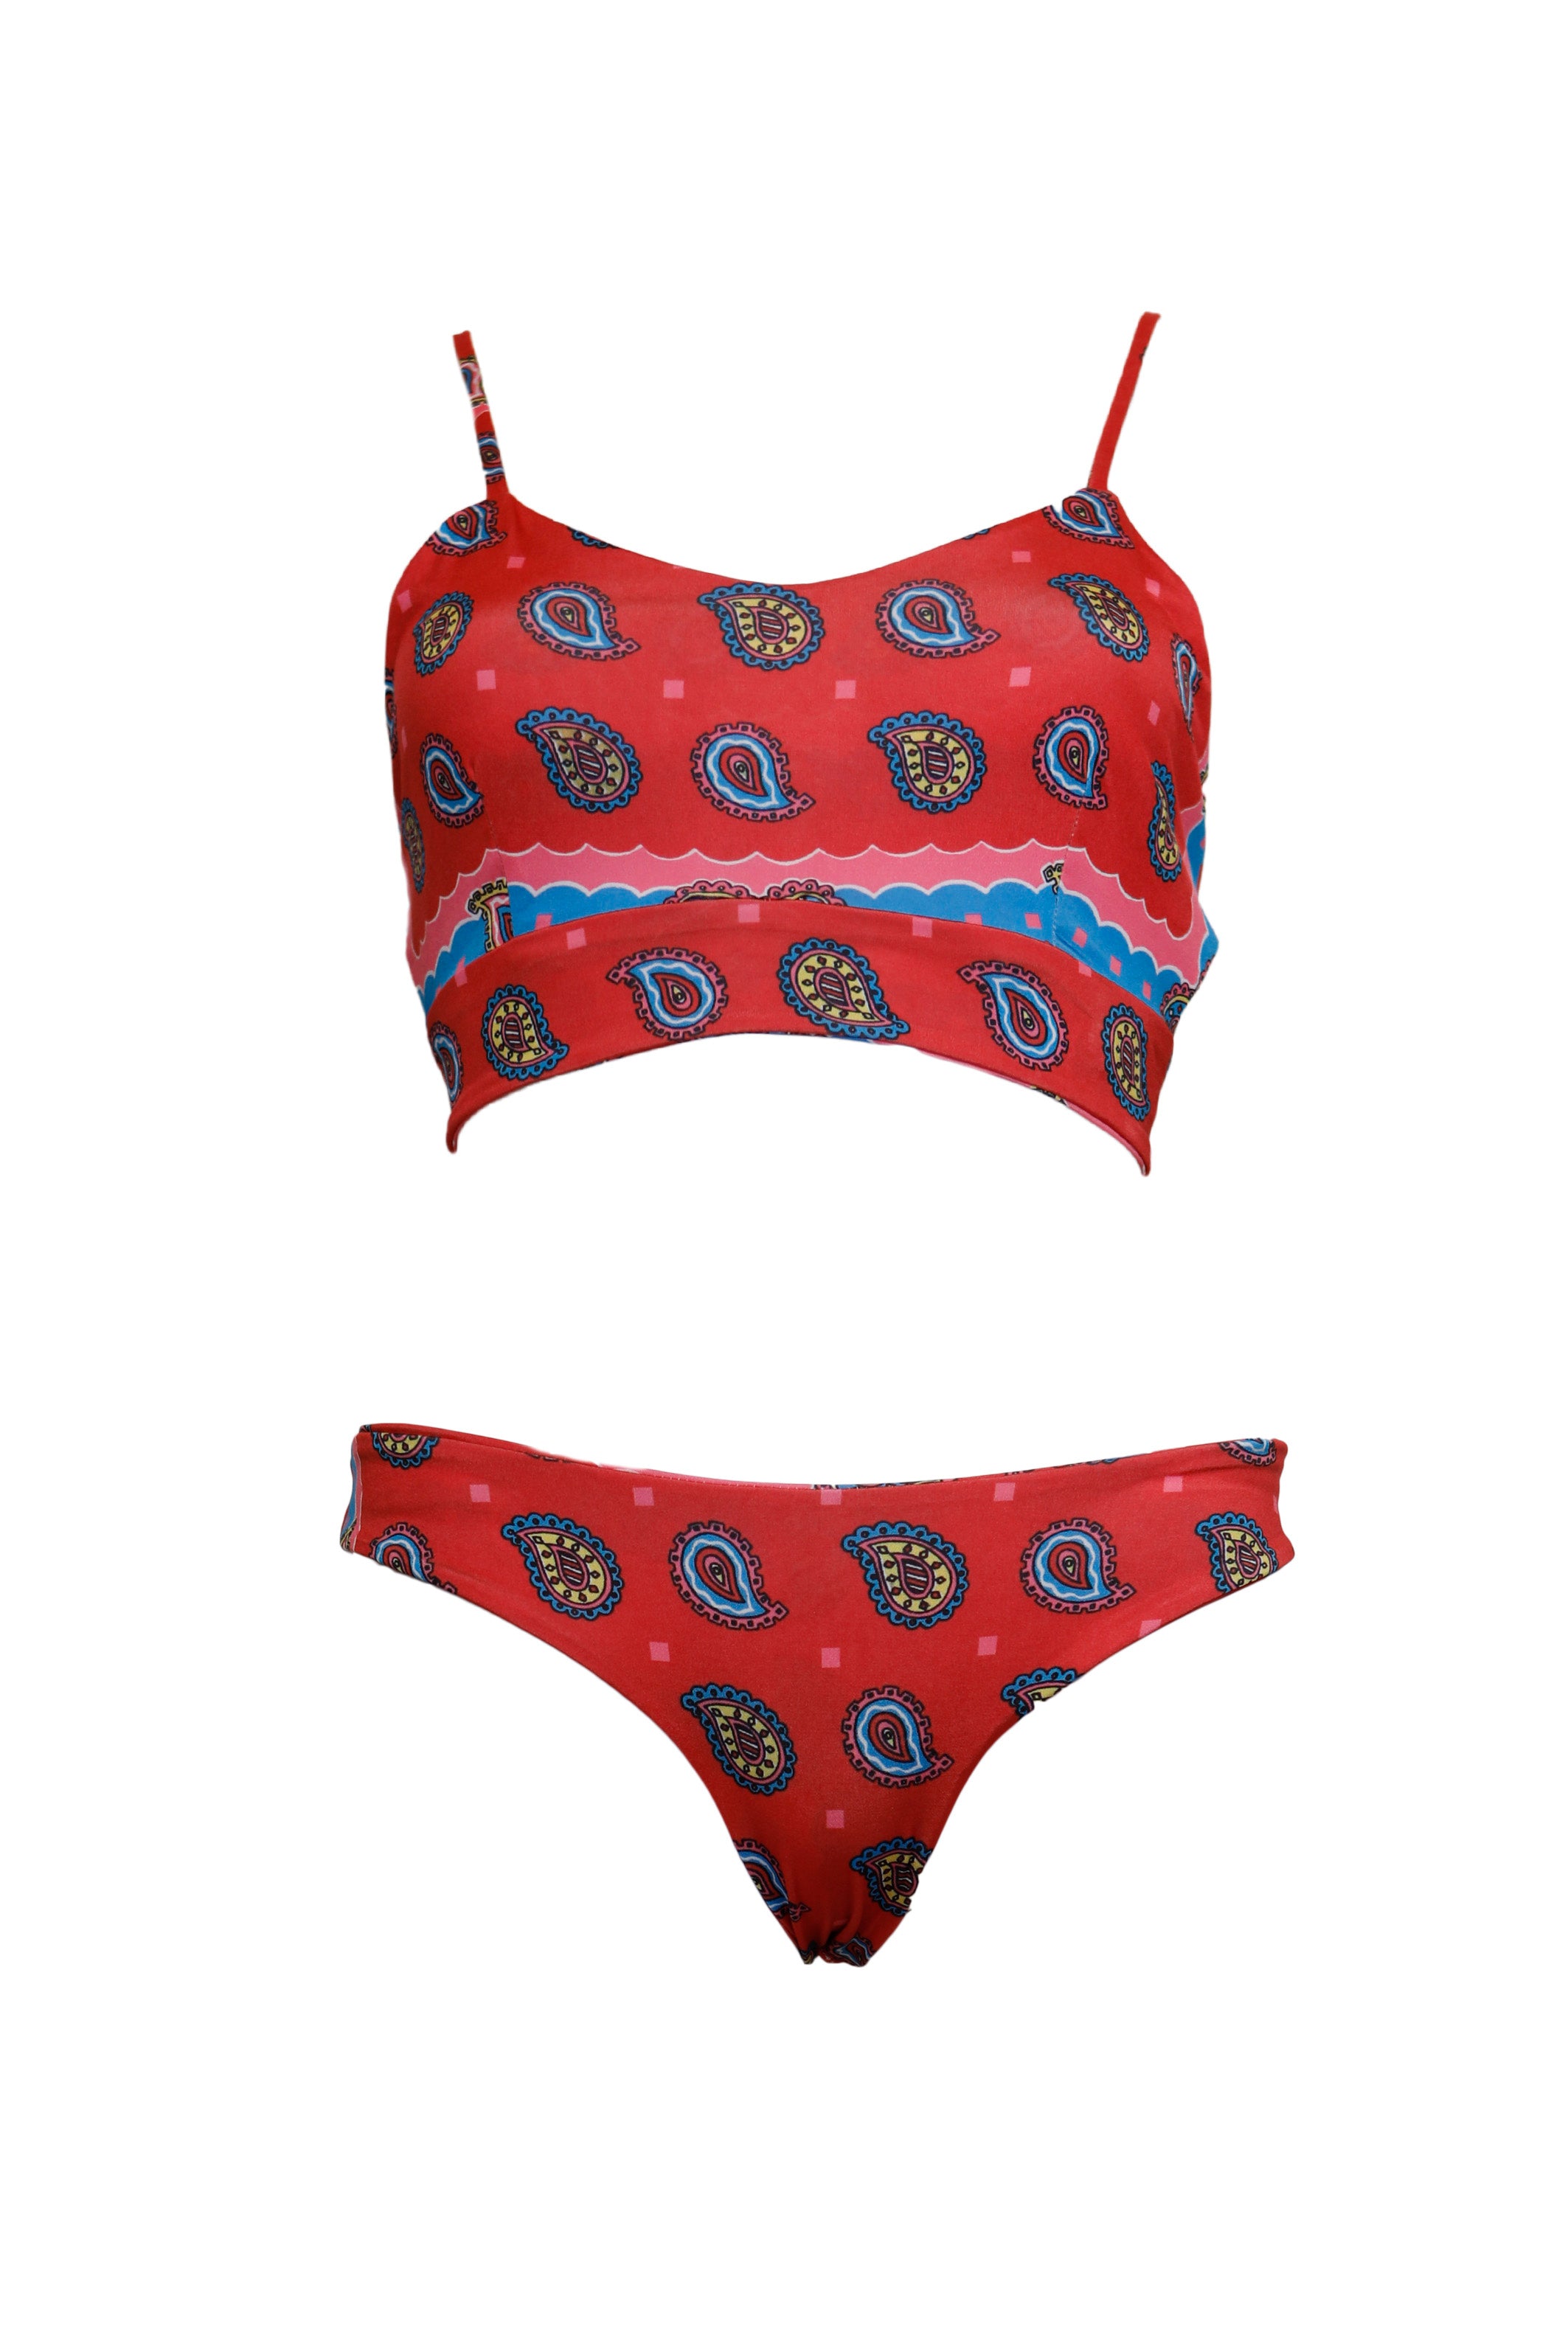 CECILIA - two-piece swimsuit in red Ibiza bandana print lycra